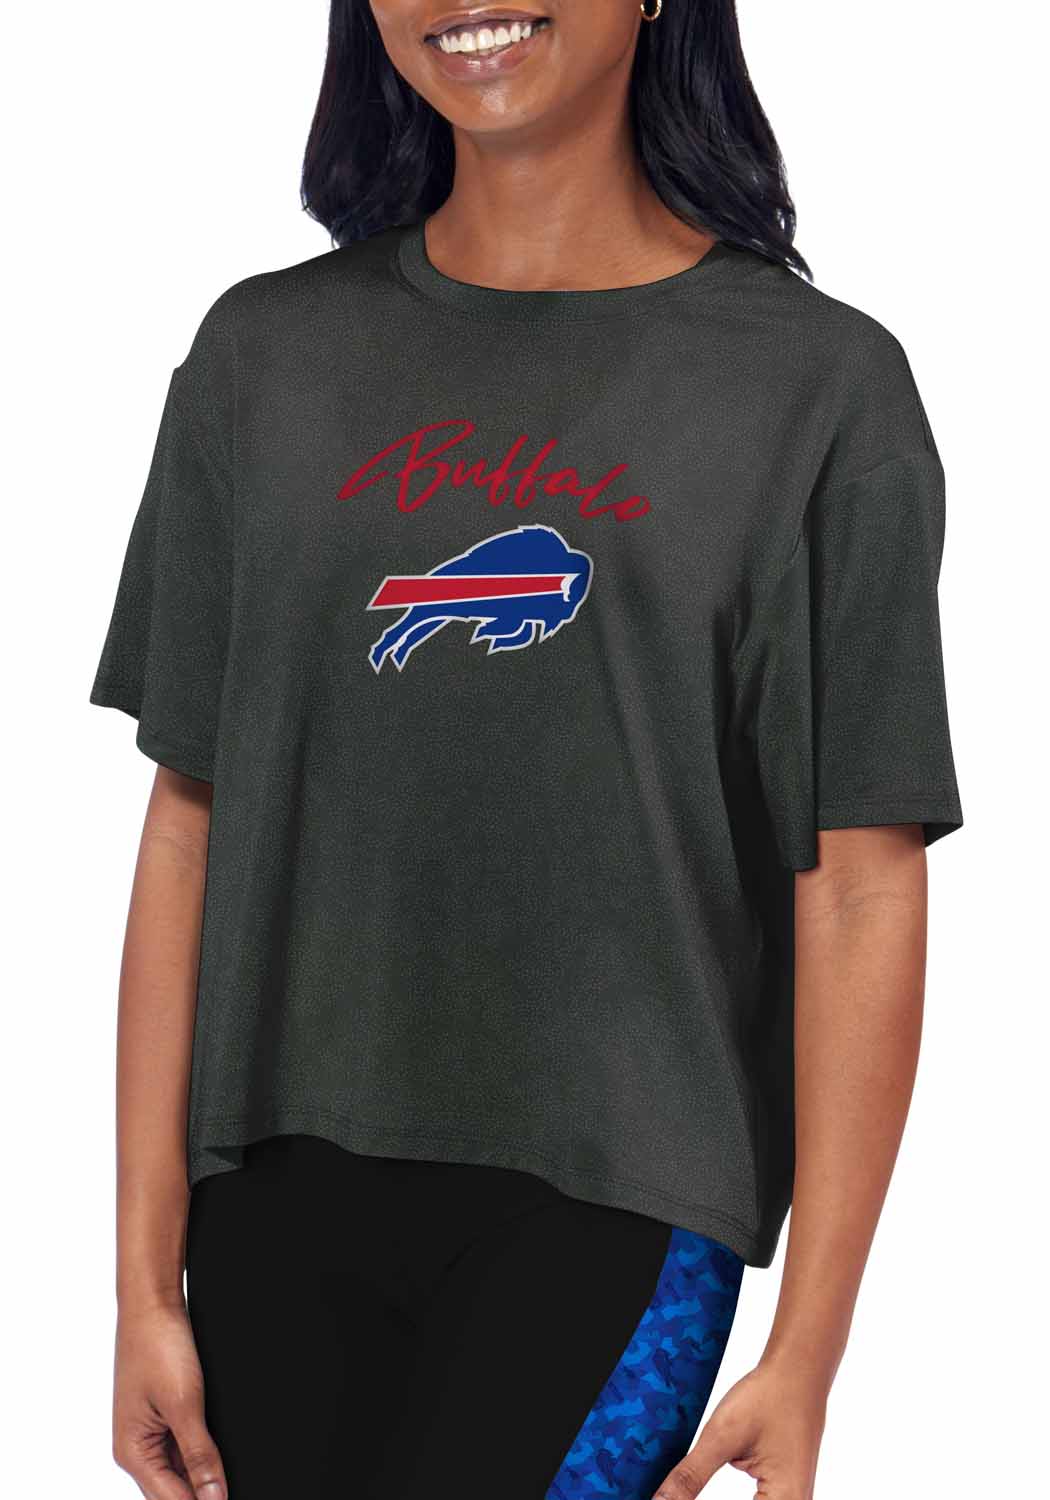 Buffalo Bills NFL Women's Crop Top - Black